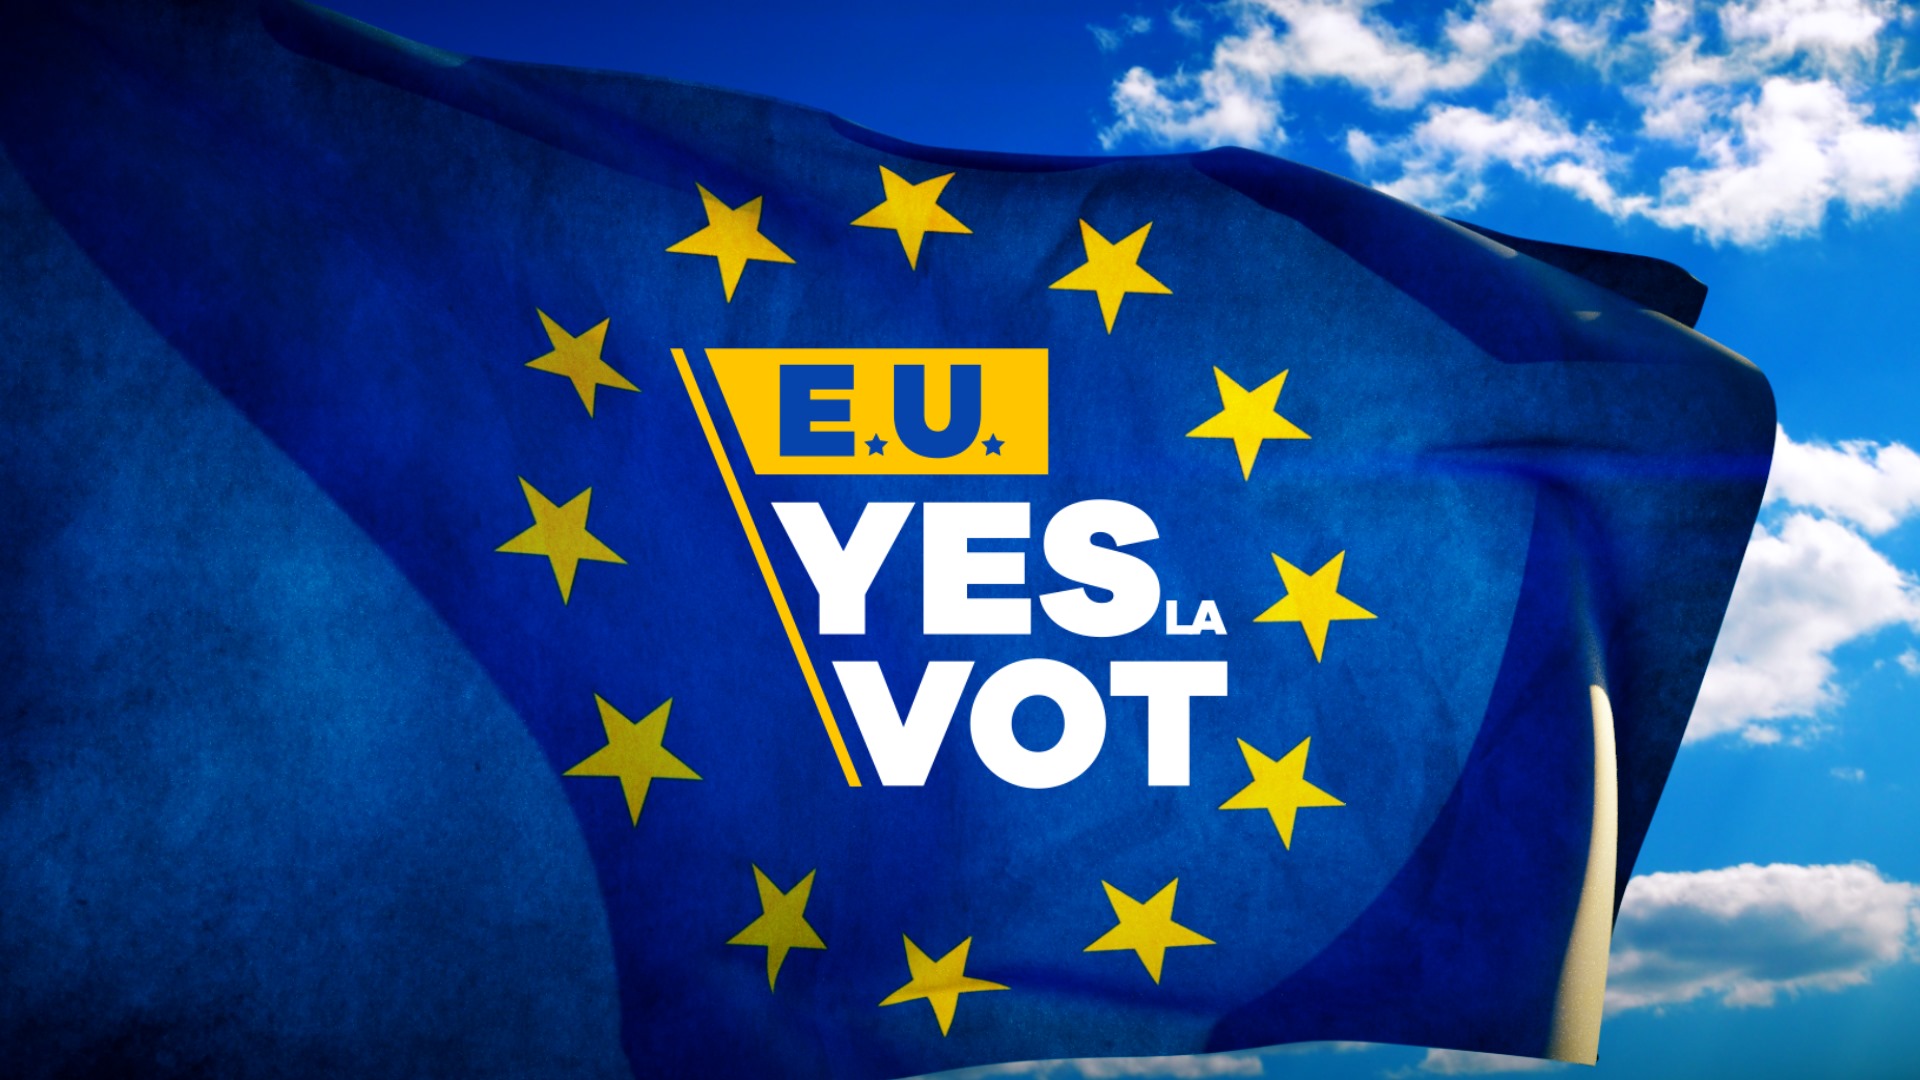 Europa FM sustine campania ProTV “E.U. YES LA VOT”